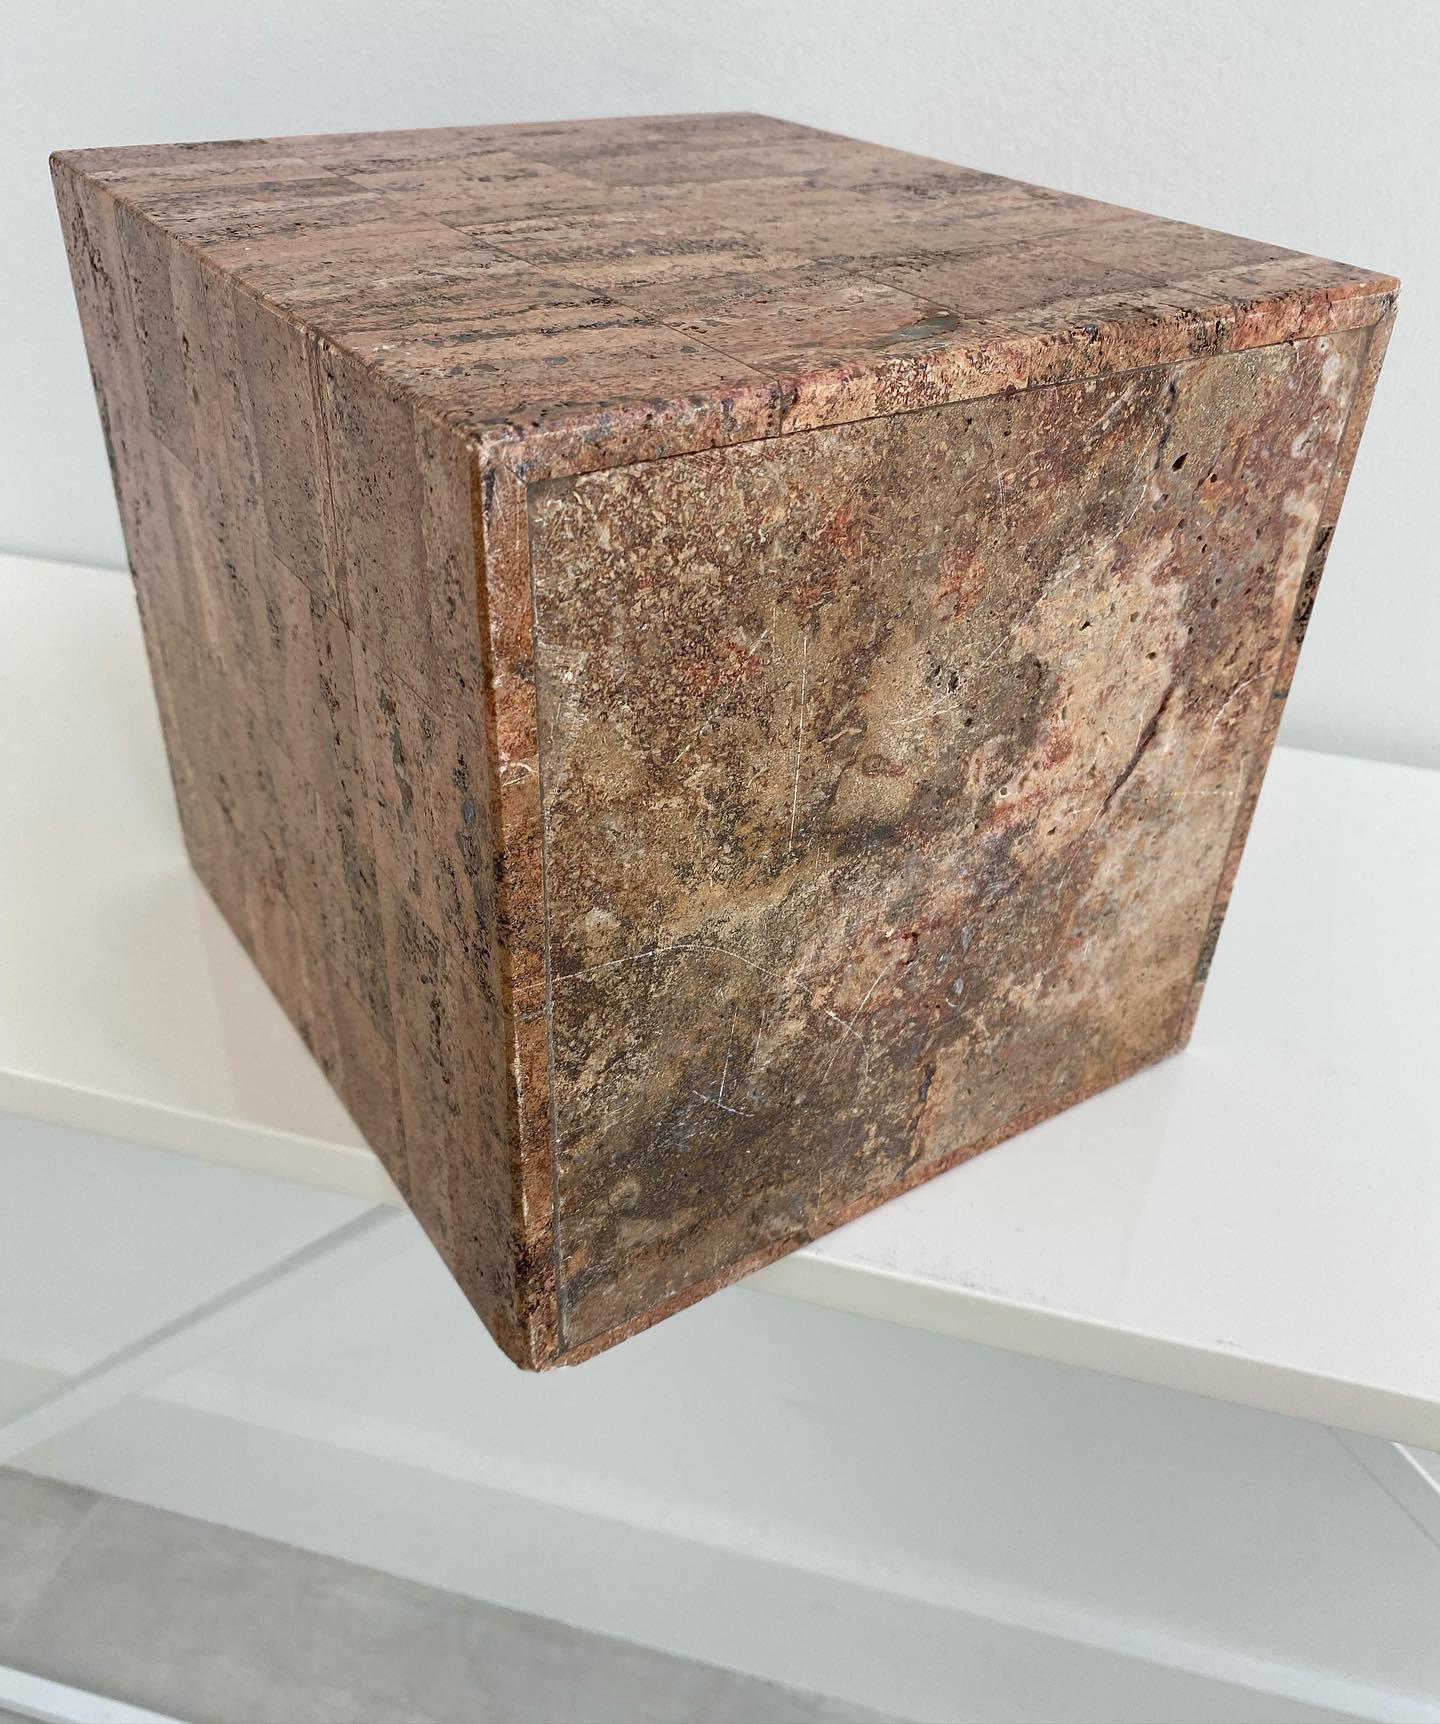 Minimalist Modernist Red Travertine Cube Form Planter Vessel For Sale 3